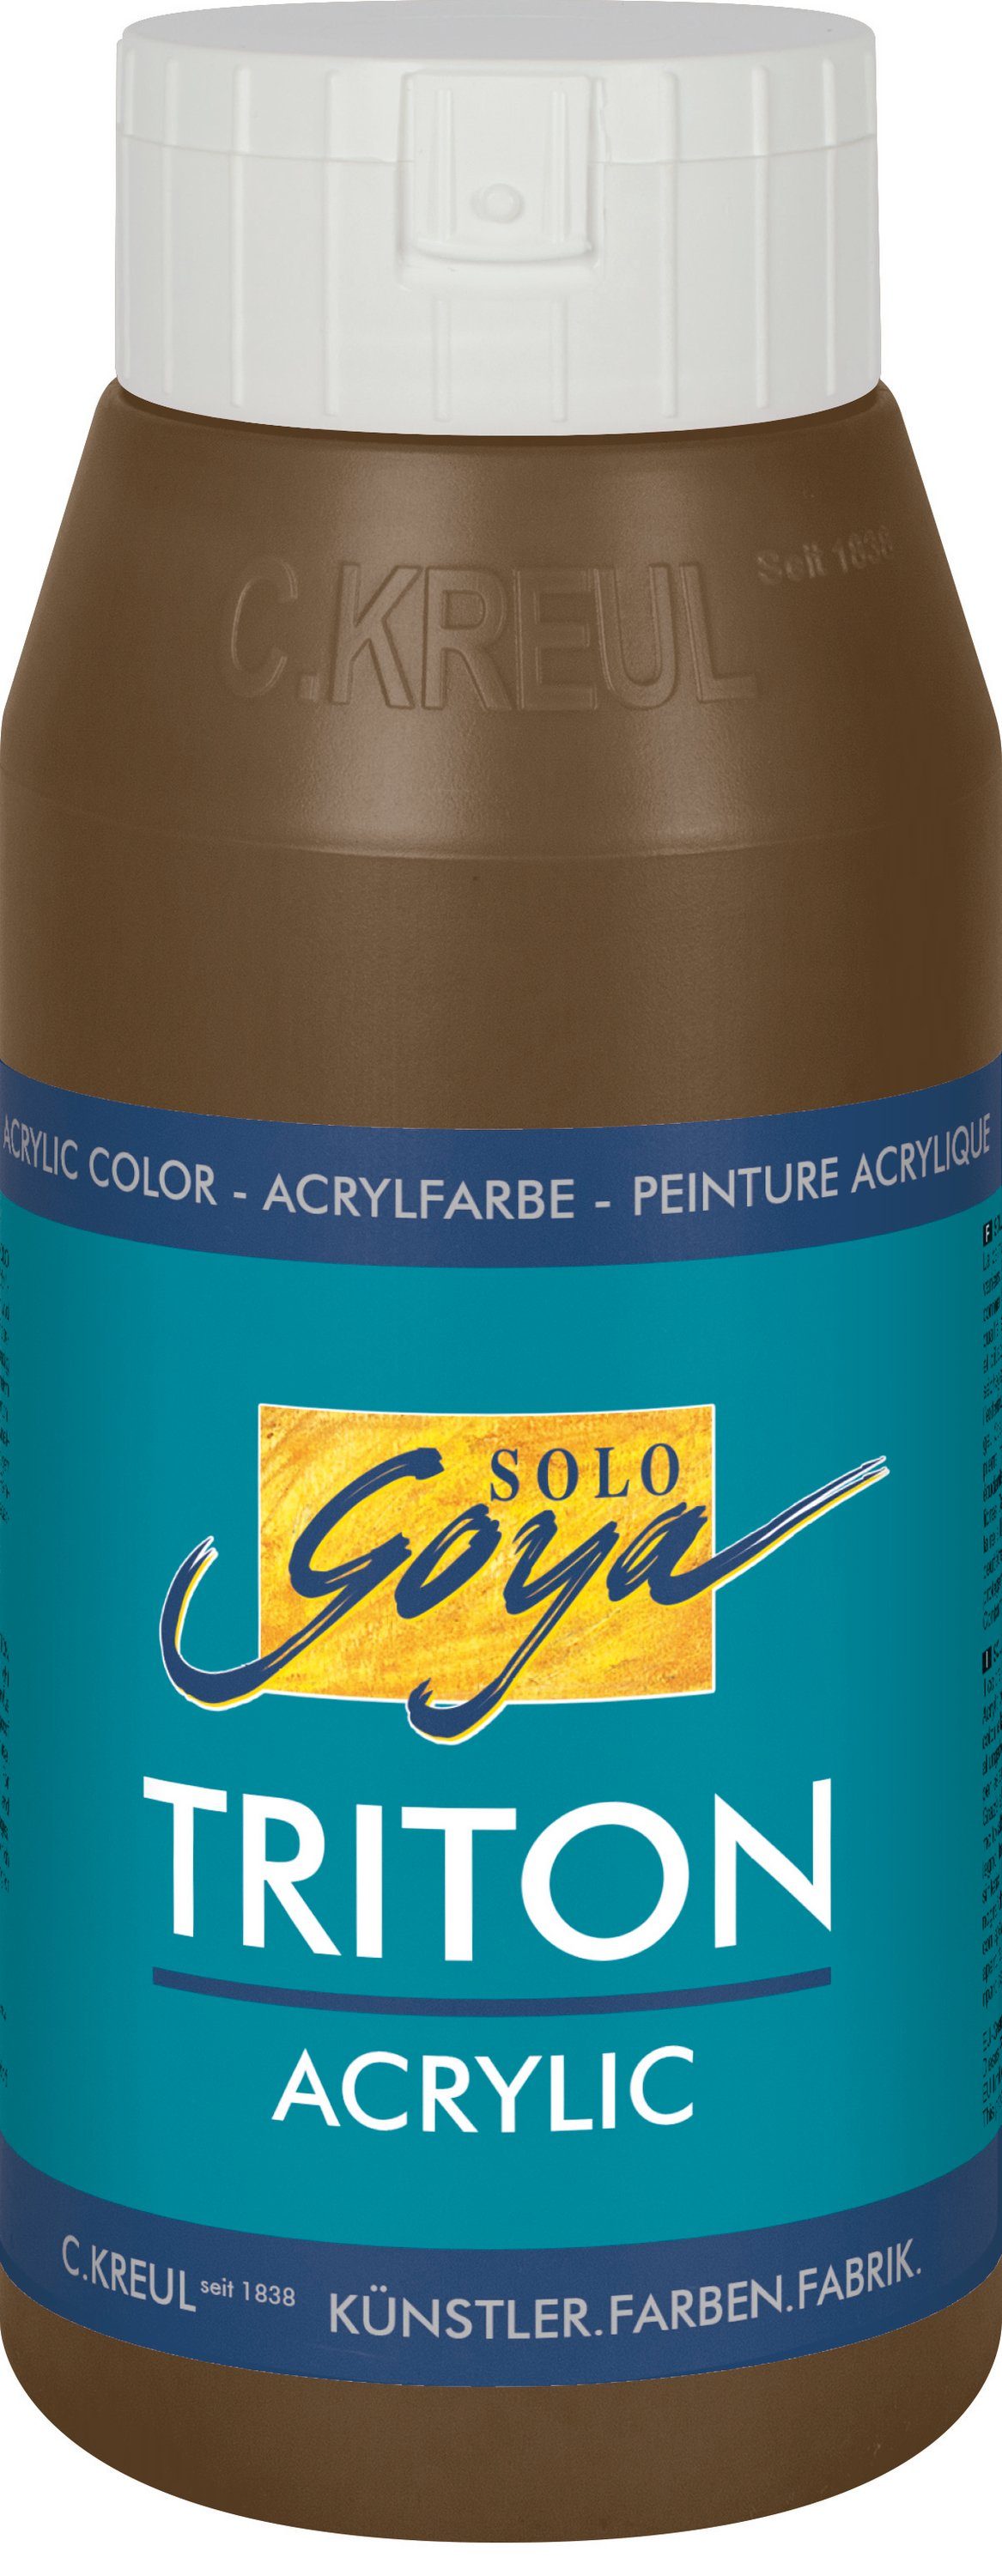 Kreul Acrylfarbe Triton Havannabraun ml Solo Acrylic, Goya 750